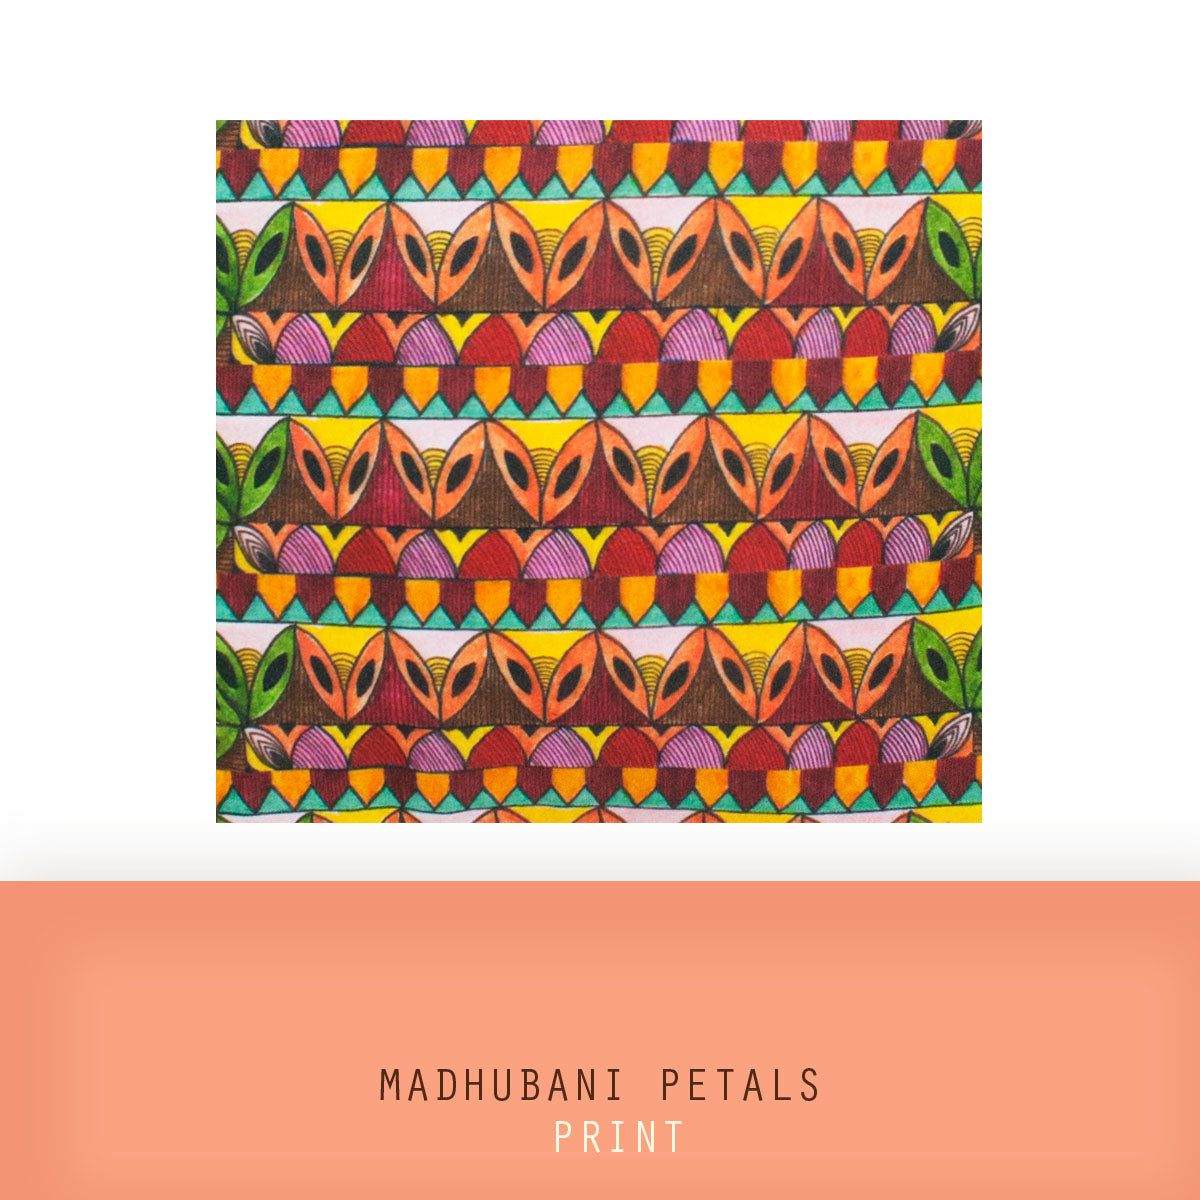 Madhubani Petals Tote Bag